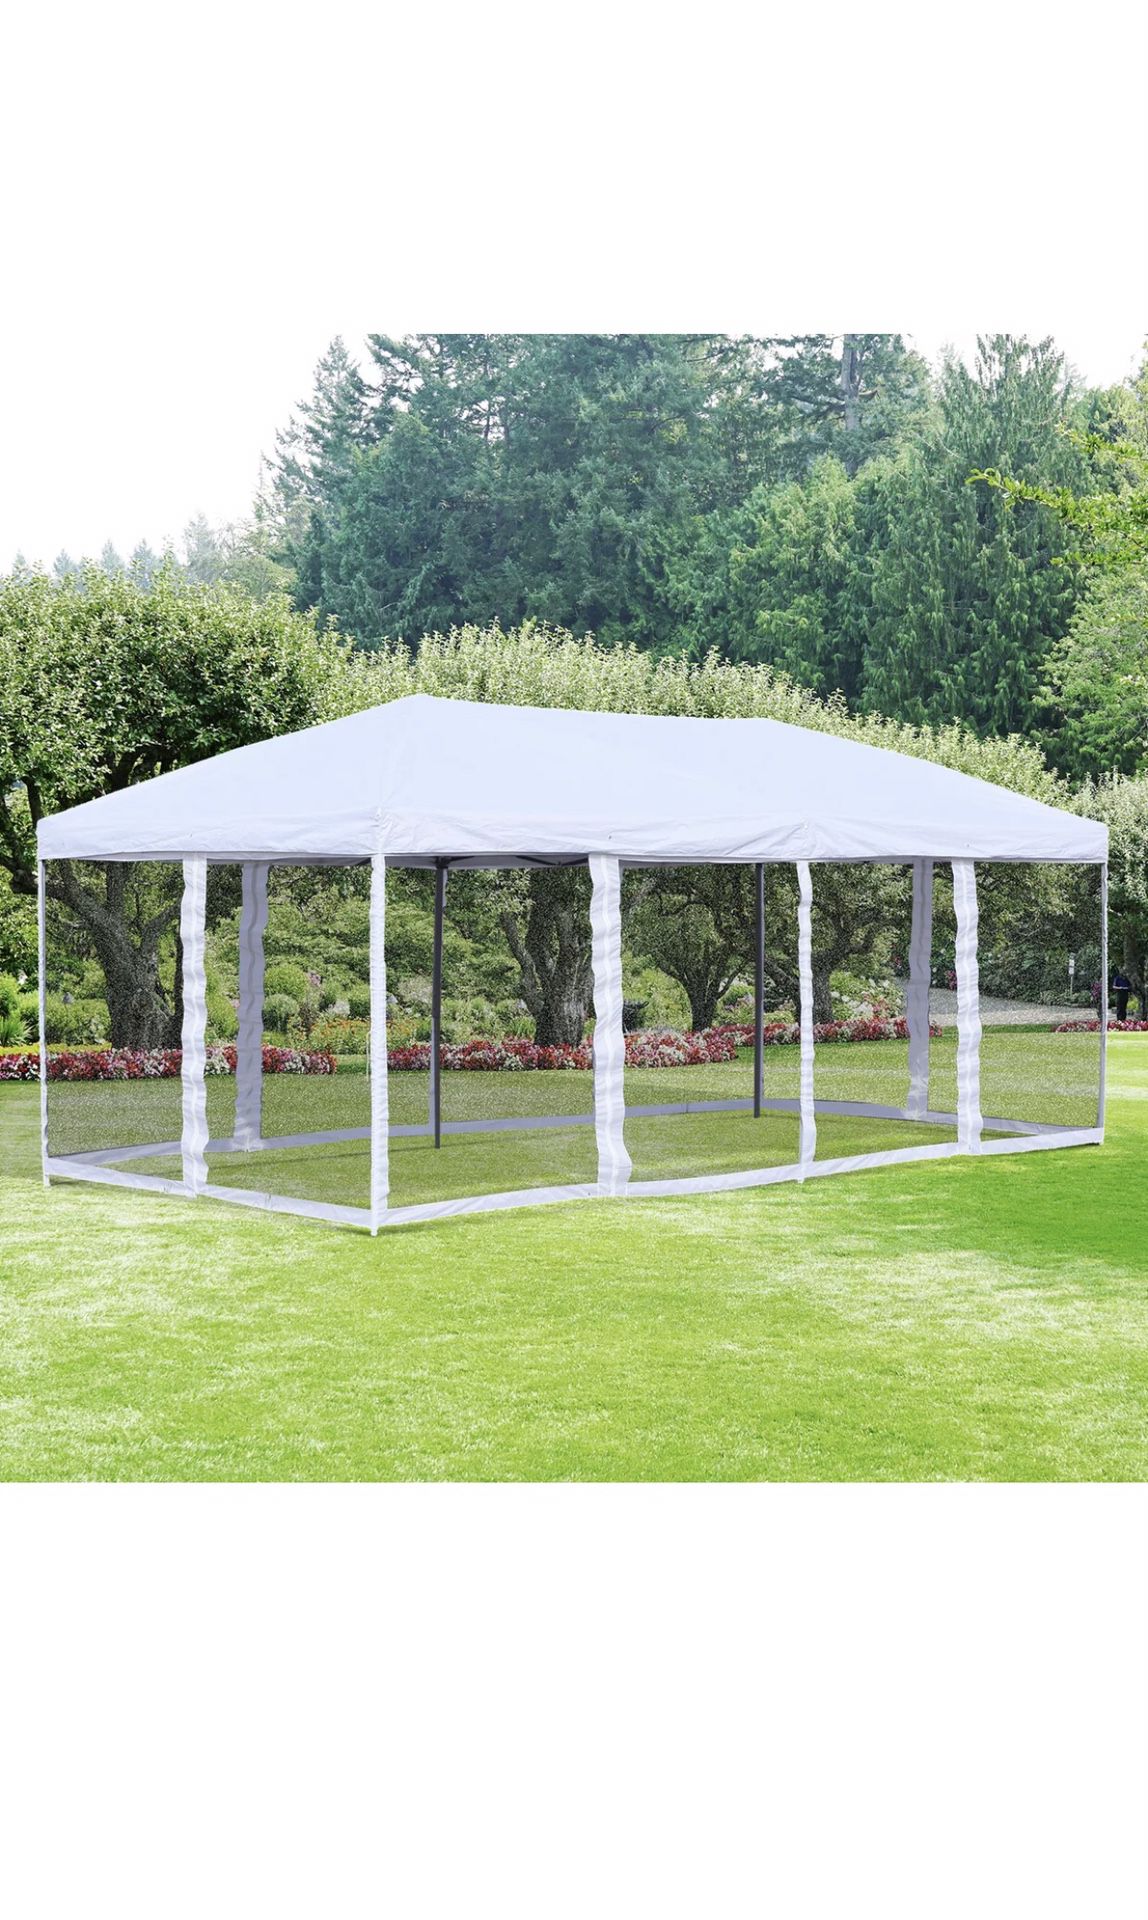 10x20 Feet White Outdoor Easy Pop Up Patio Garden Gazebo Canopy Party Picnic Tent